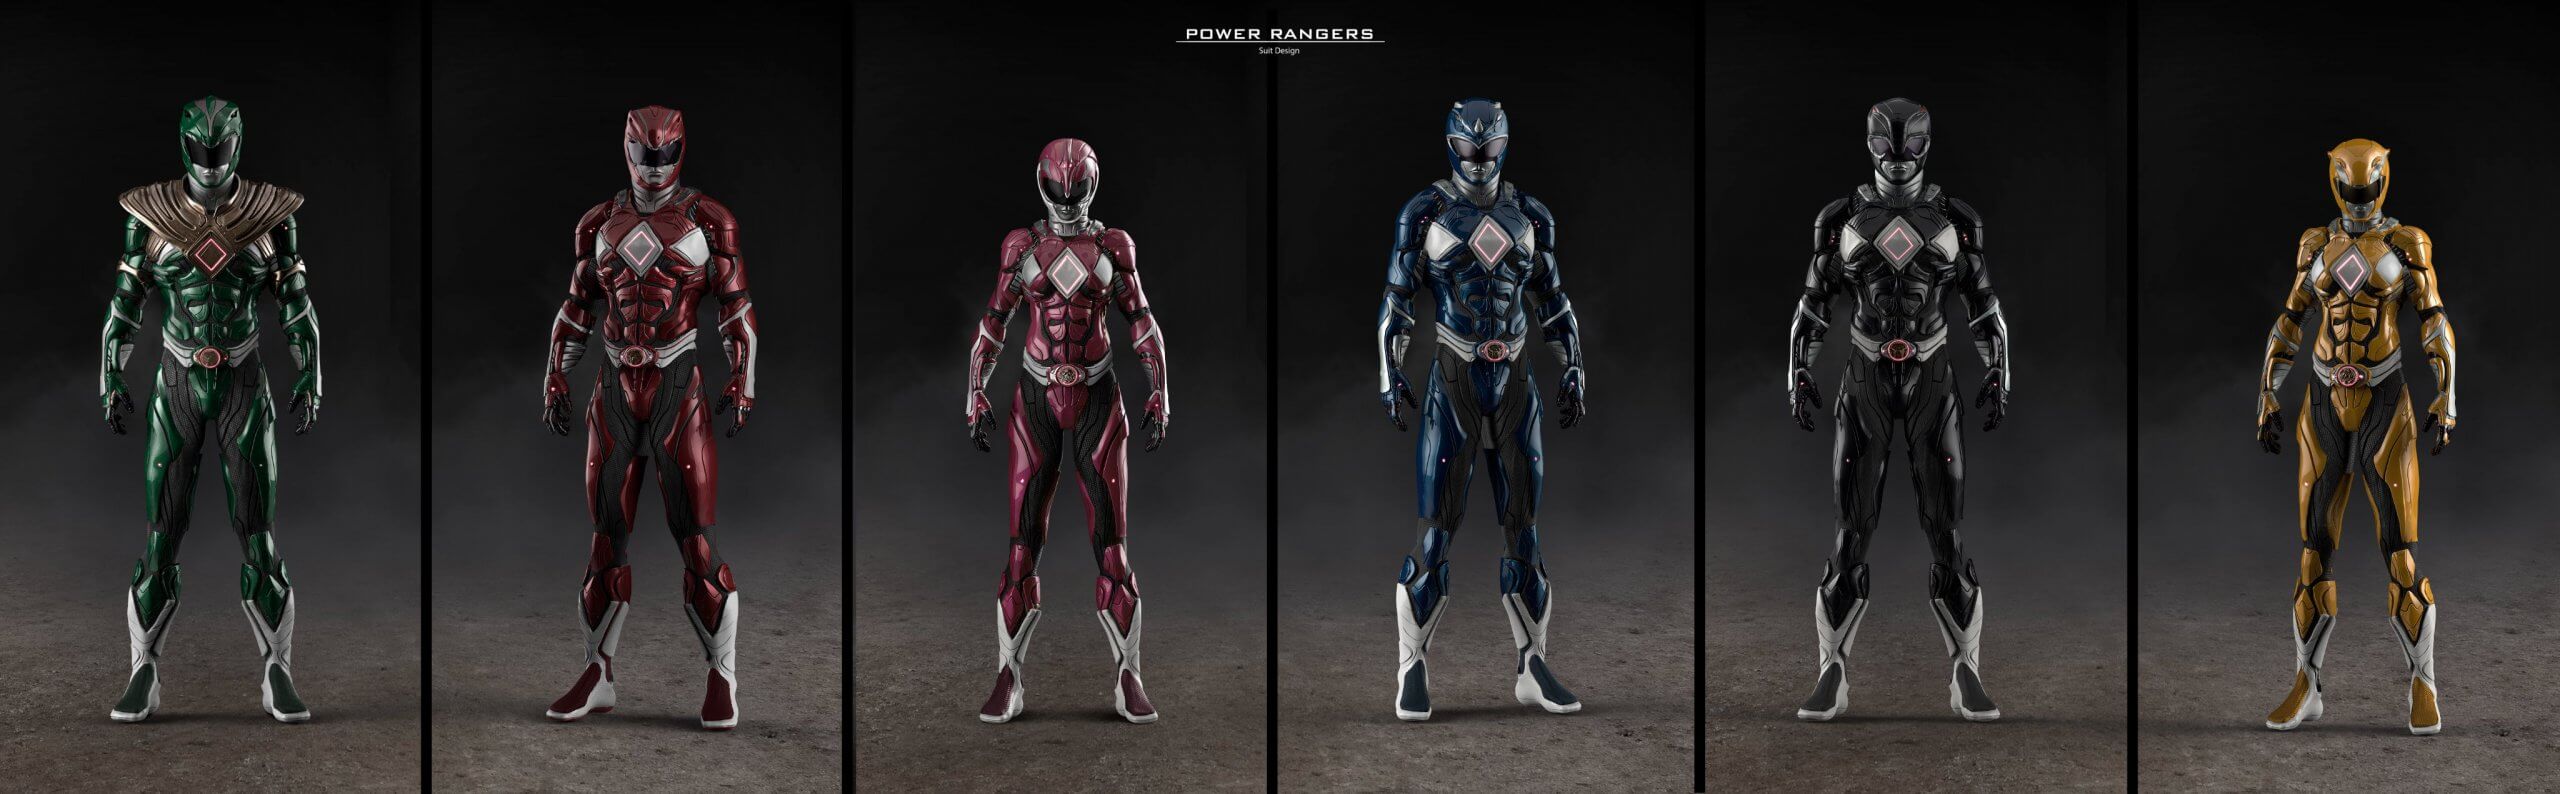 Power-Rangers-concept-art-4-scaled